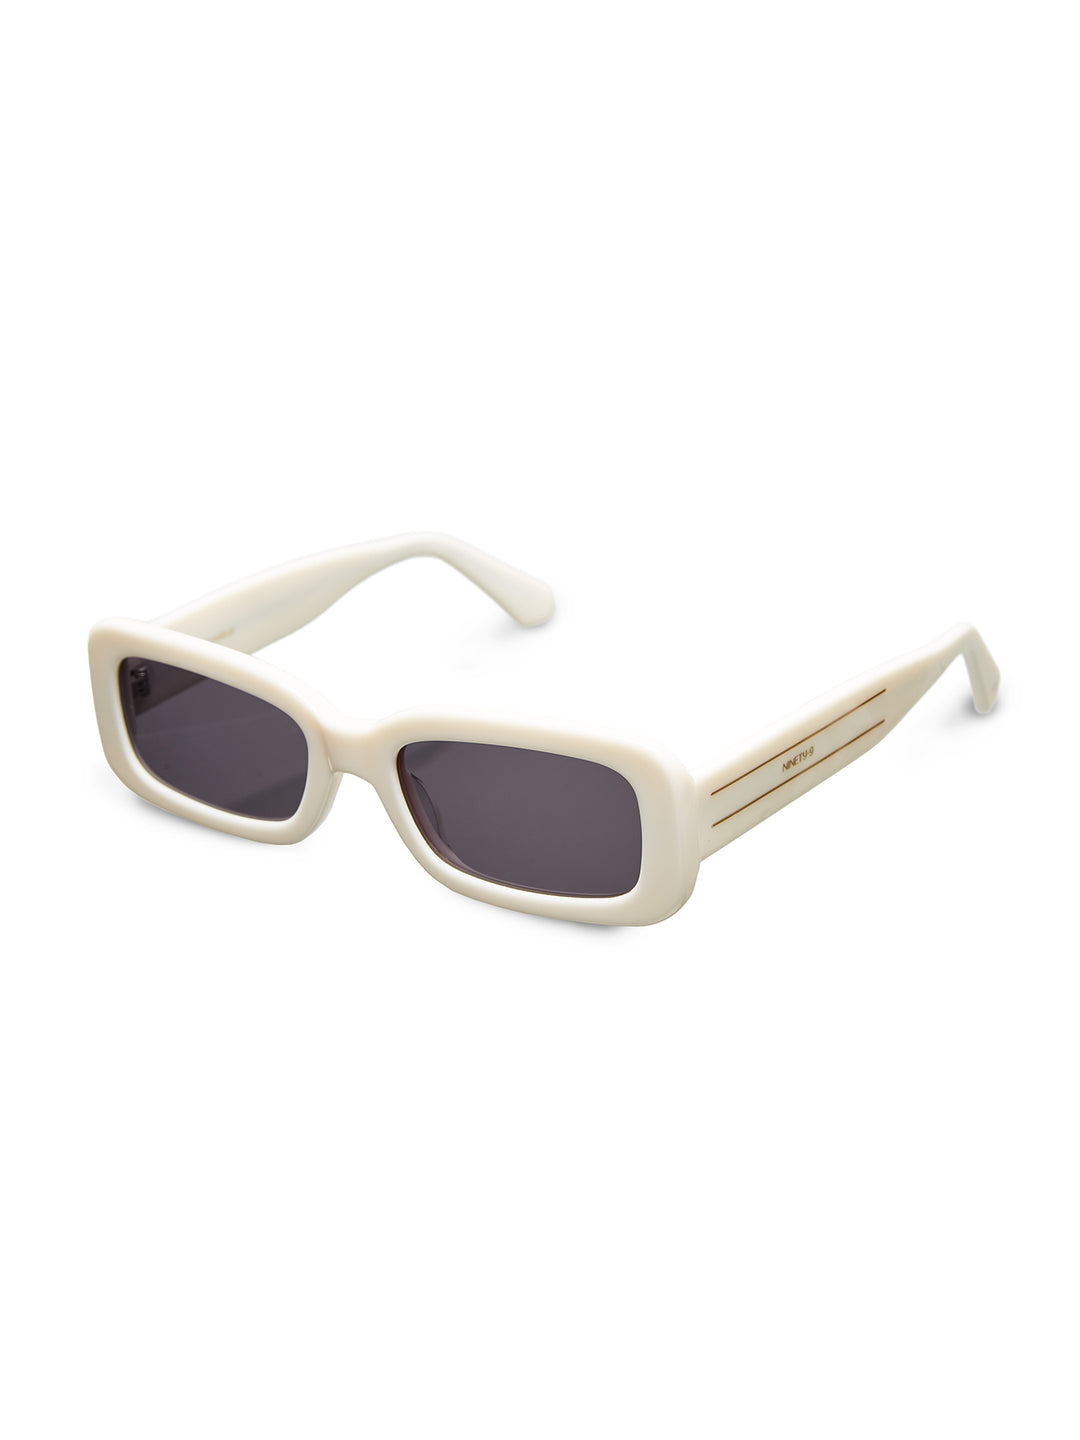 RETRO - Sunglasses • Cream White